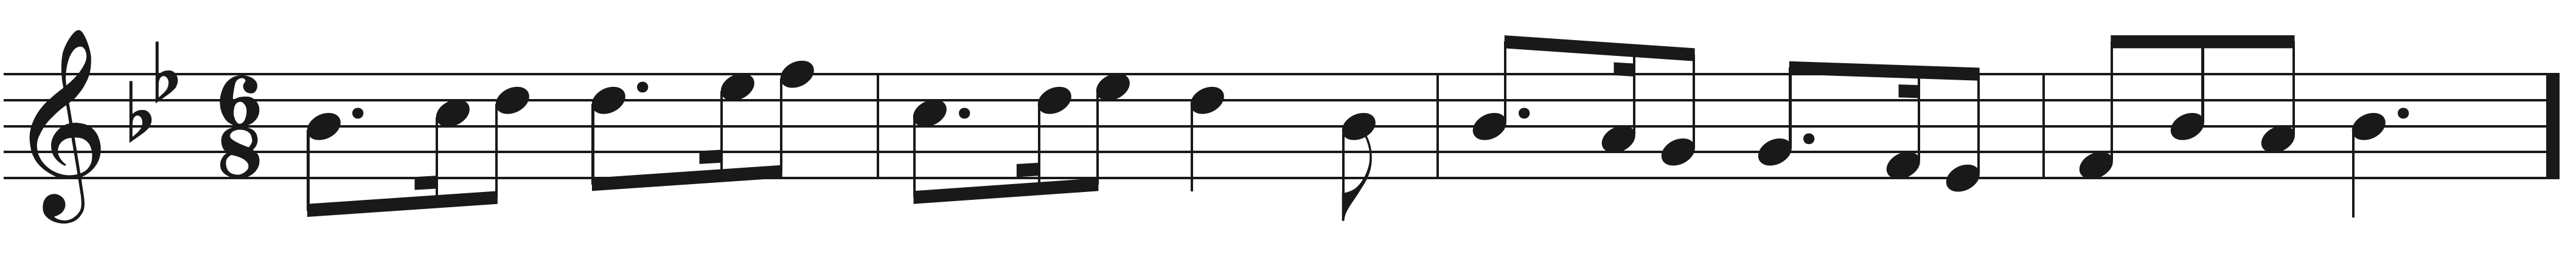 Intro to Harmonizing a Melody Sight Singing exercise example